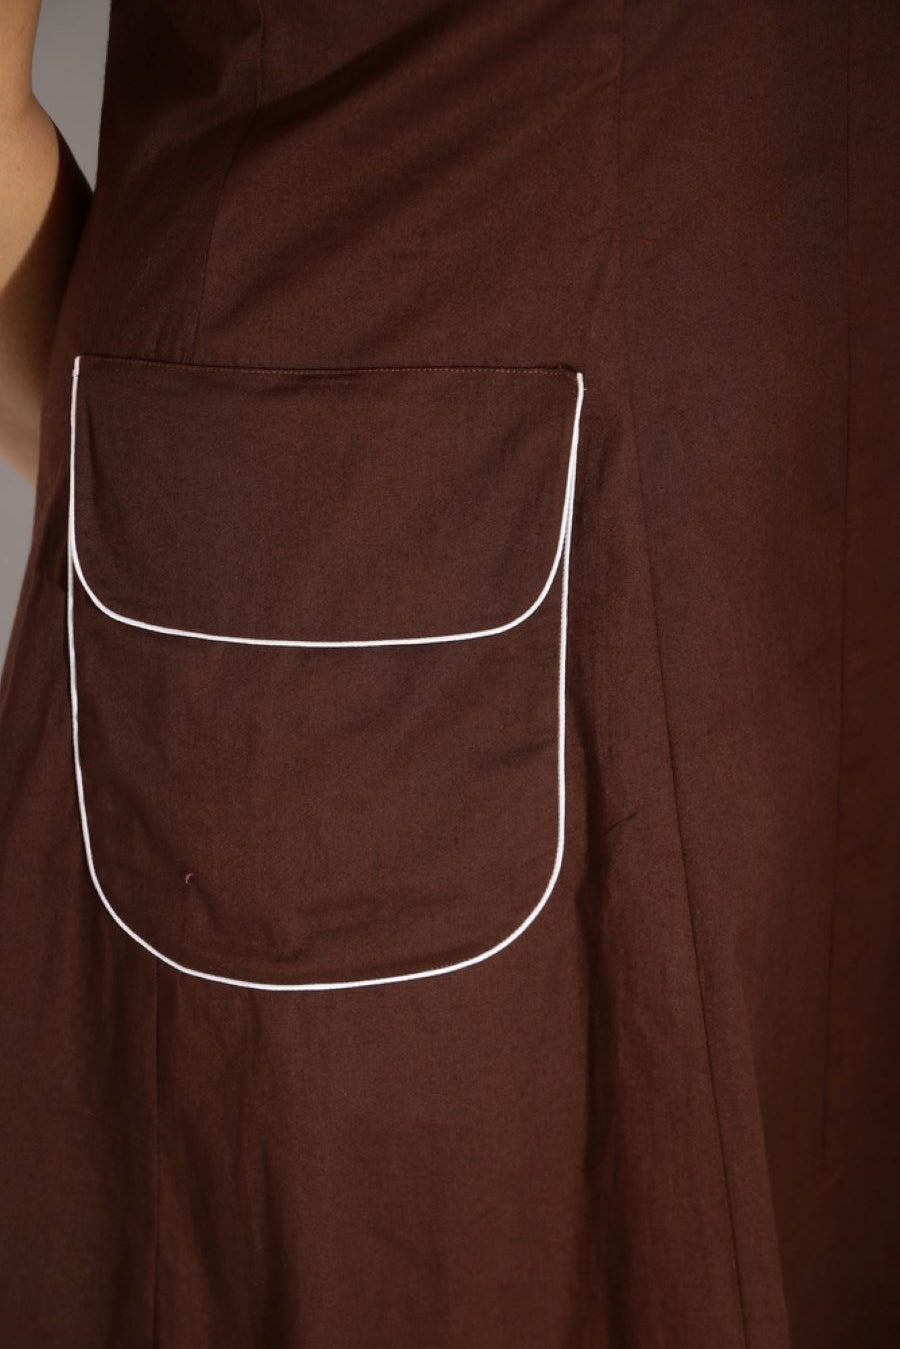 Cotton Lycra Brown Midi Dress with Pockets